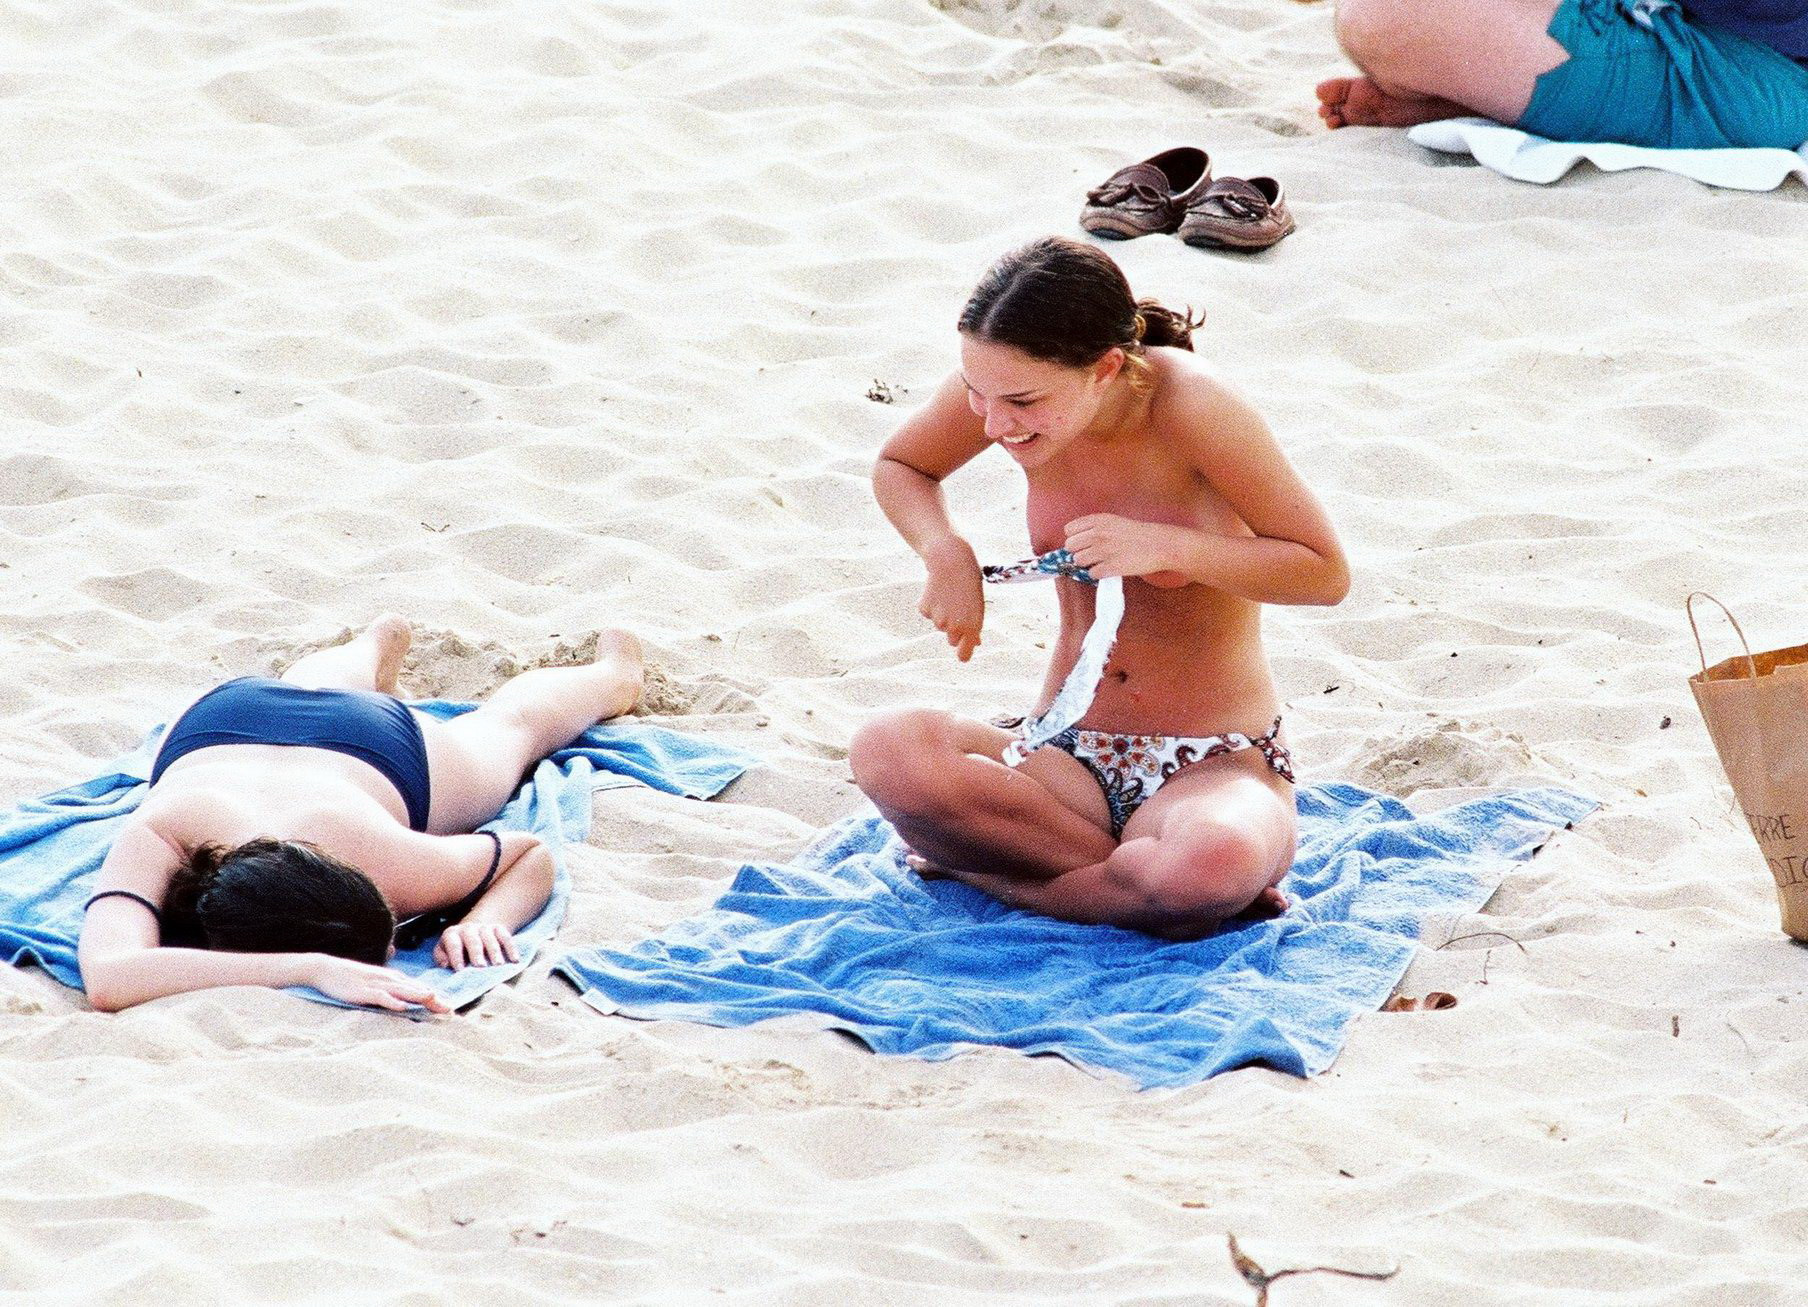 babe Natalie Portman soaking in some sun at the beach